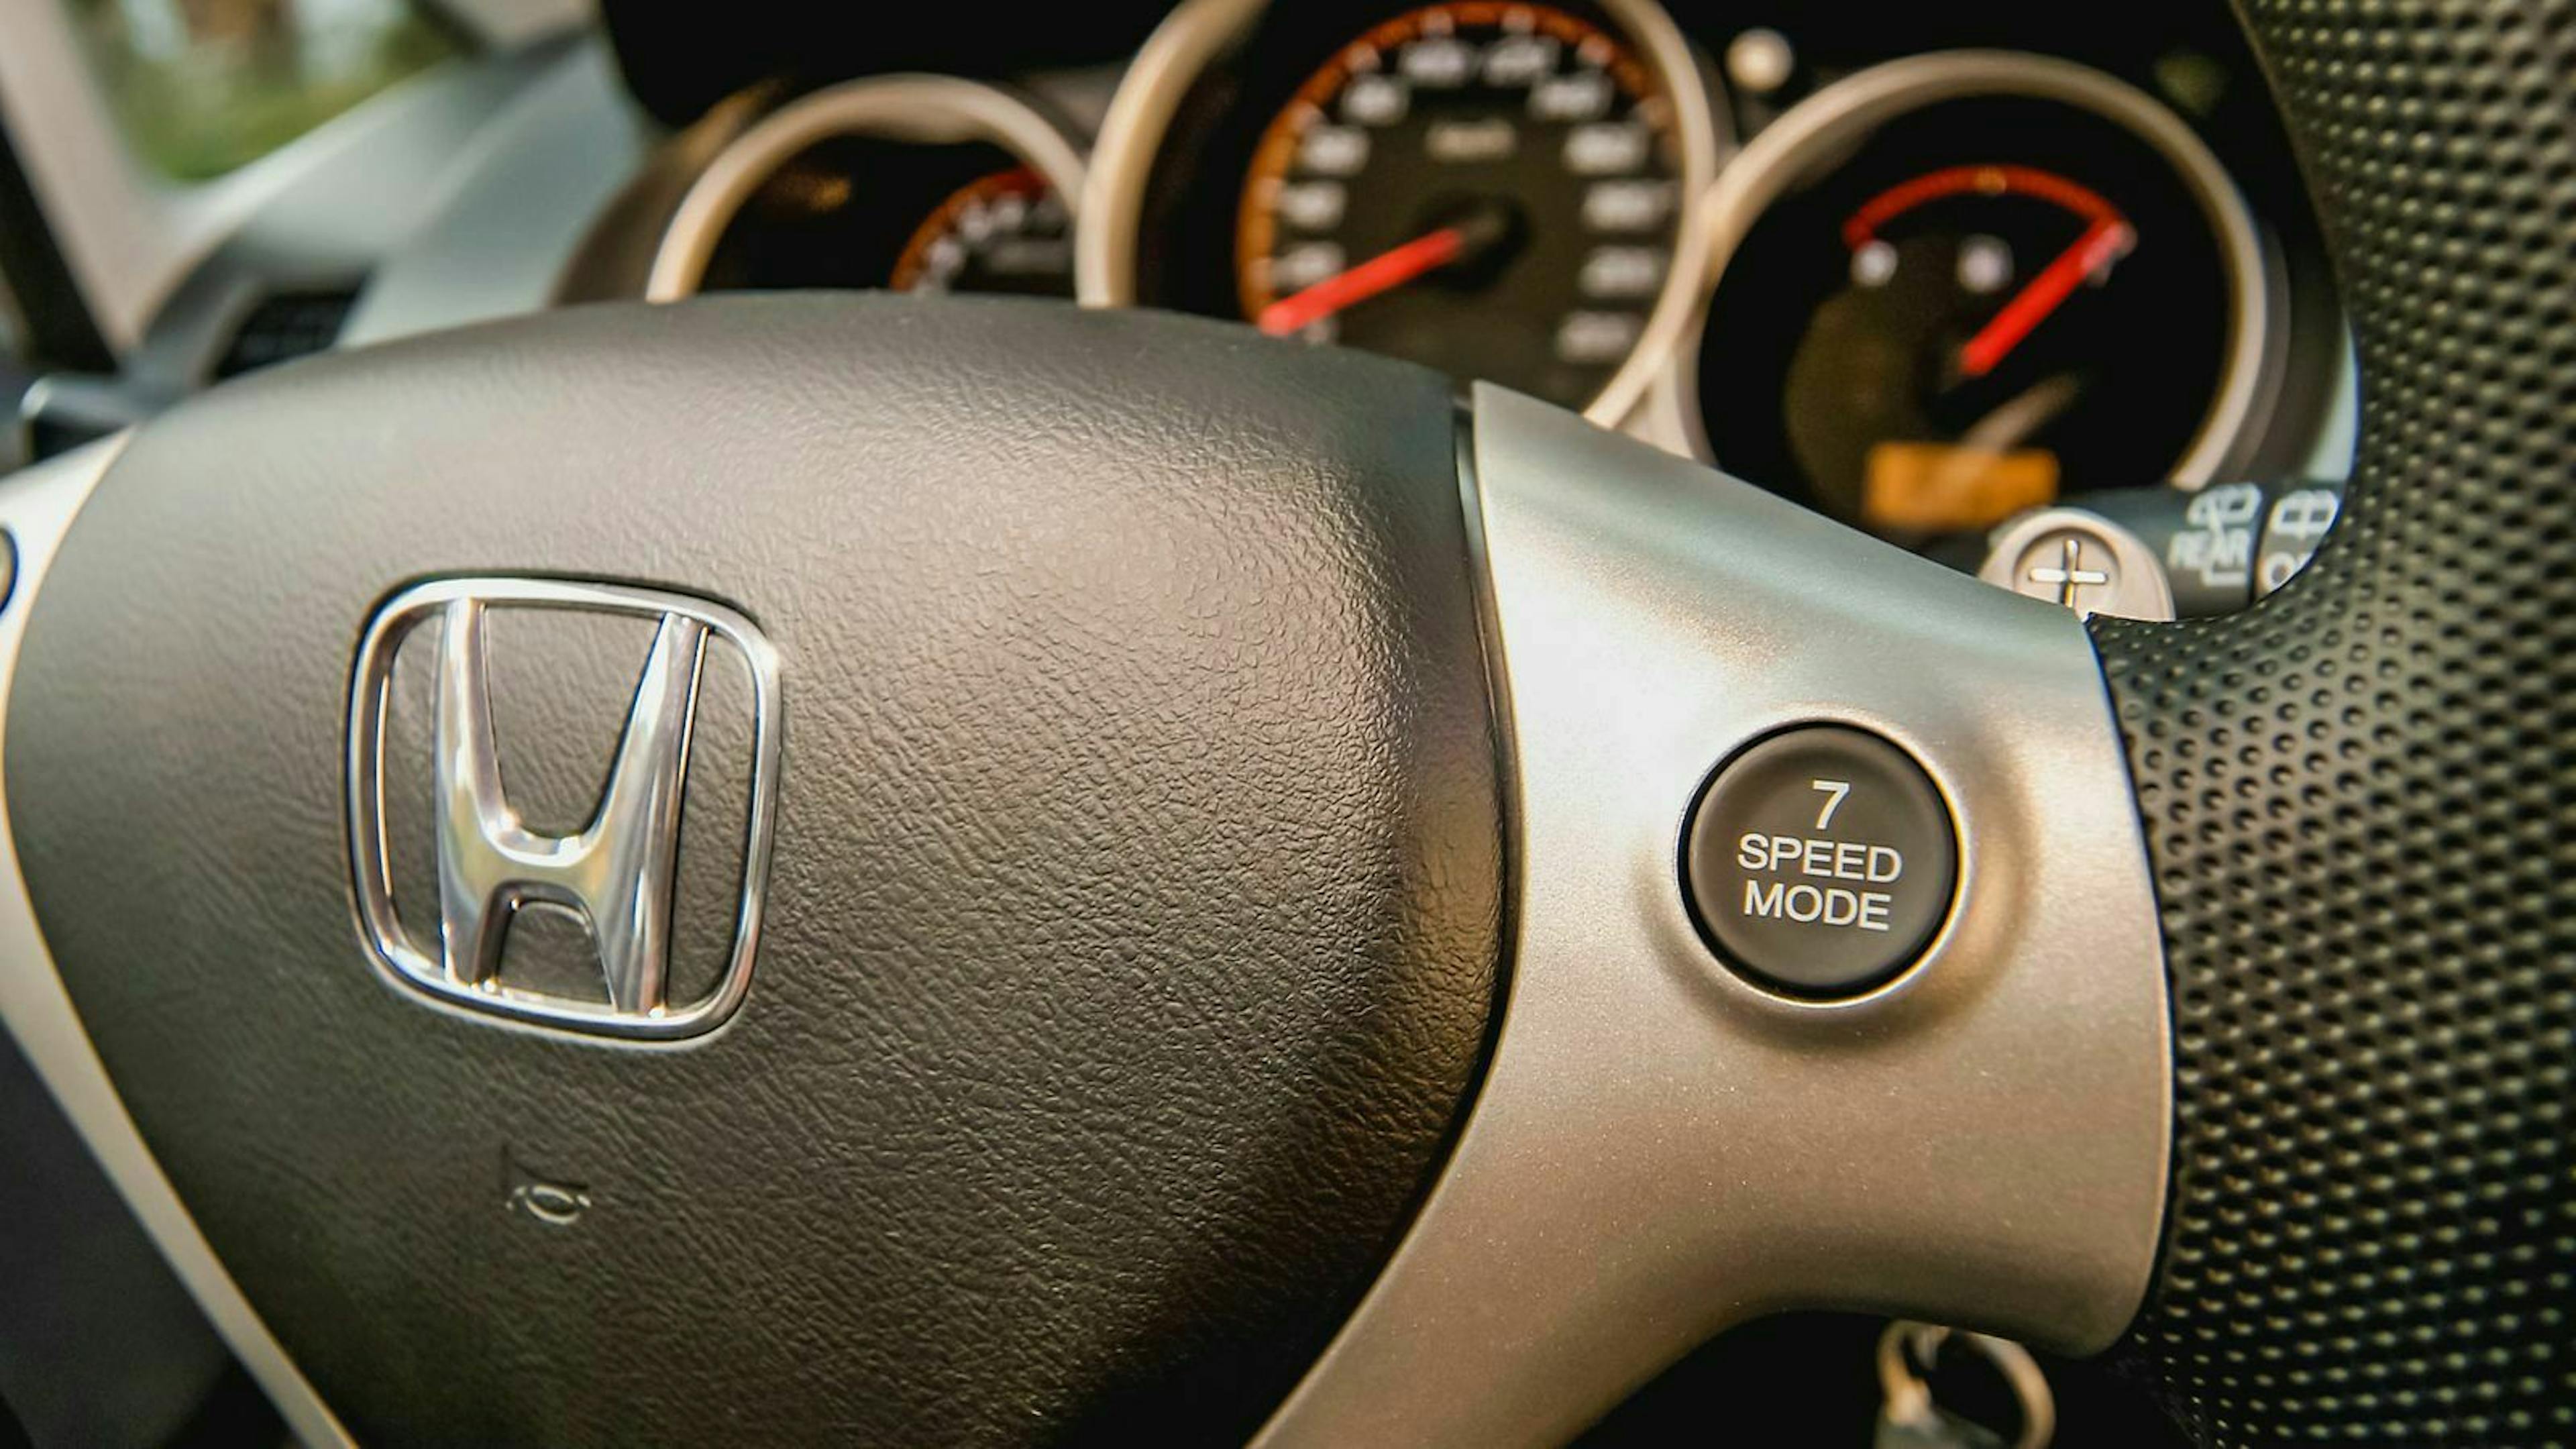 Honda Lenkrad 7-Speed-Mode-Knopf in Detailansicht